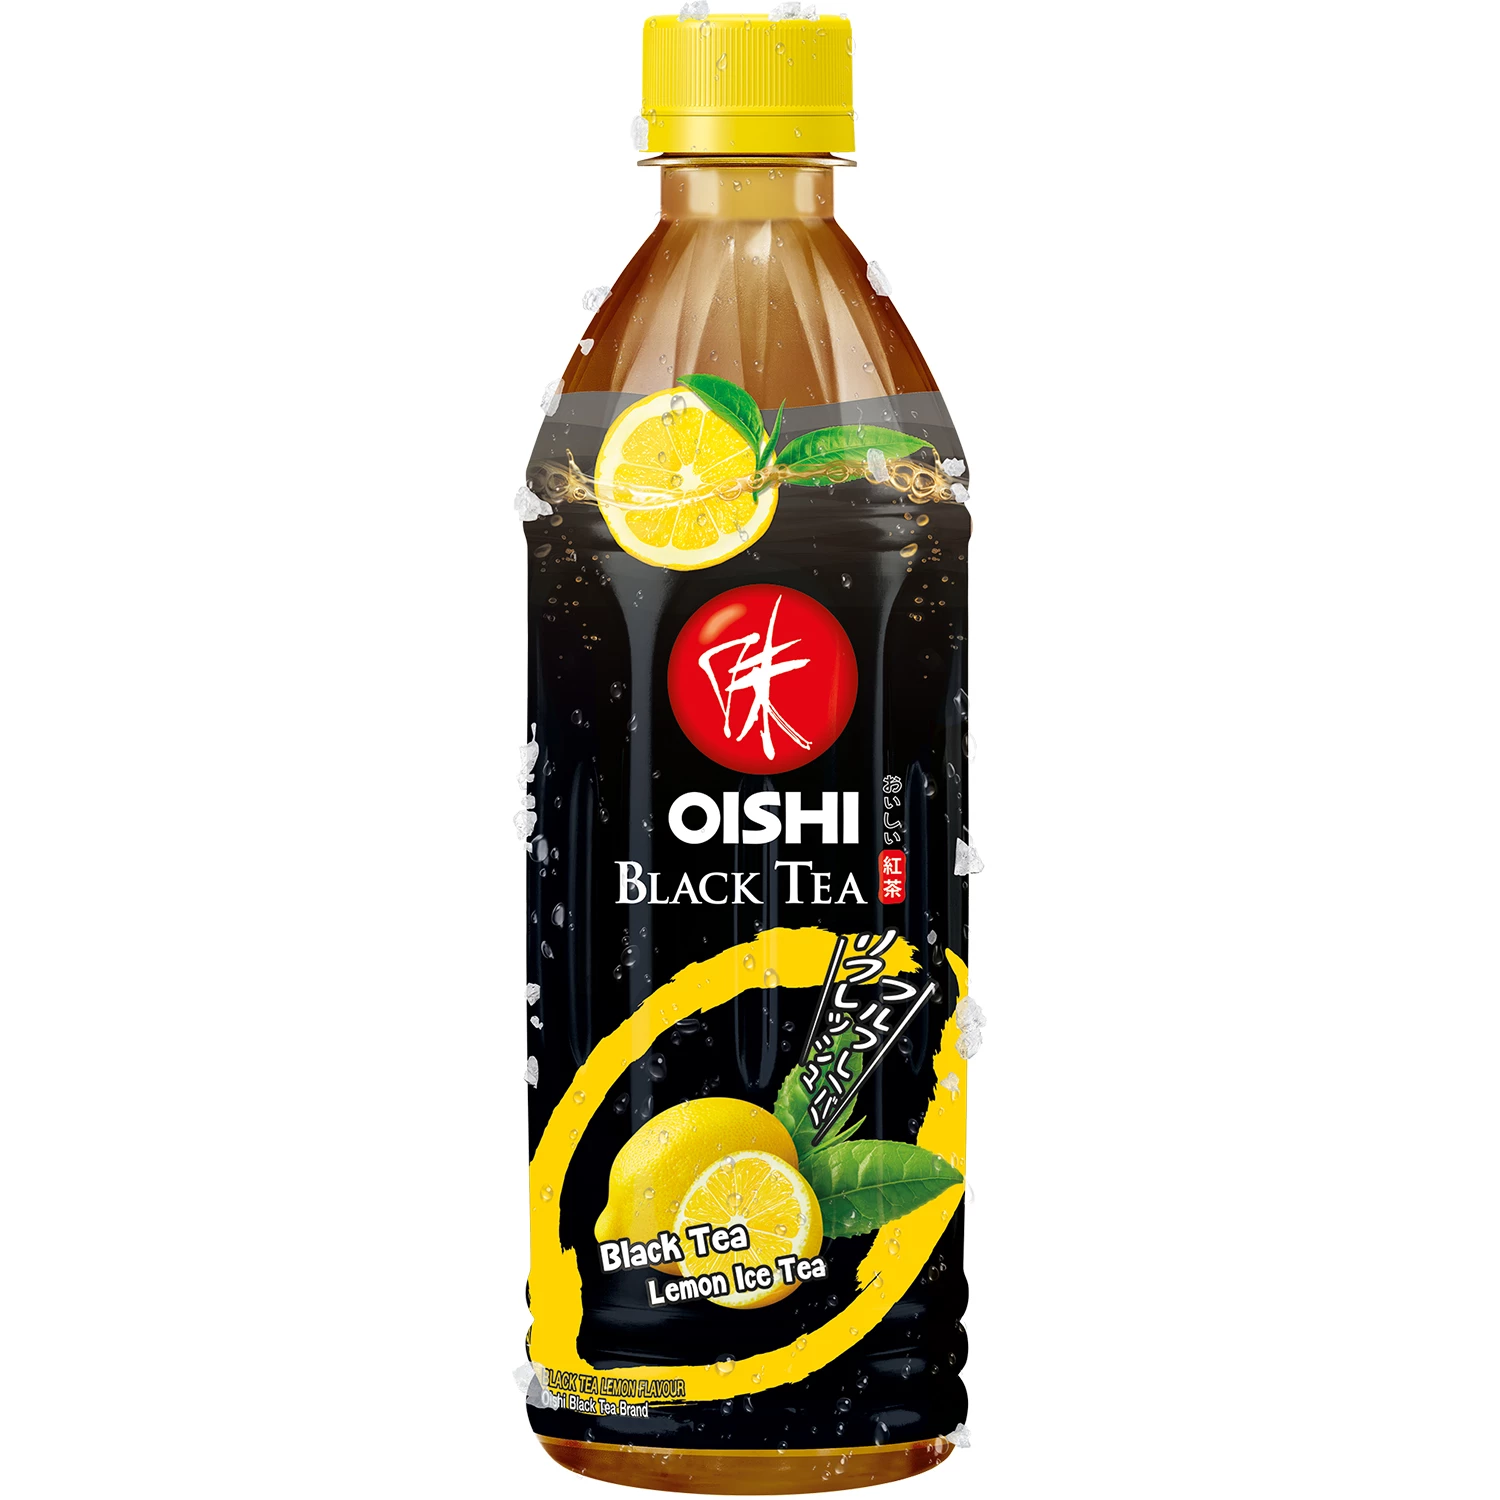 The Noir Citron - Oishi